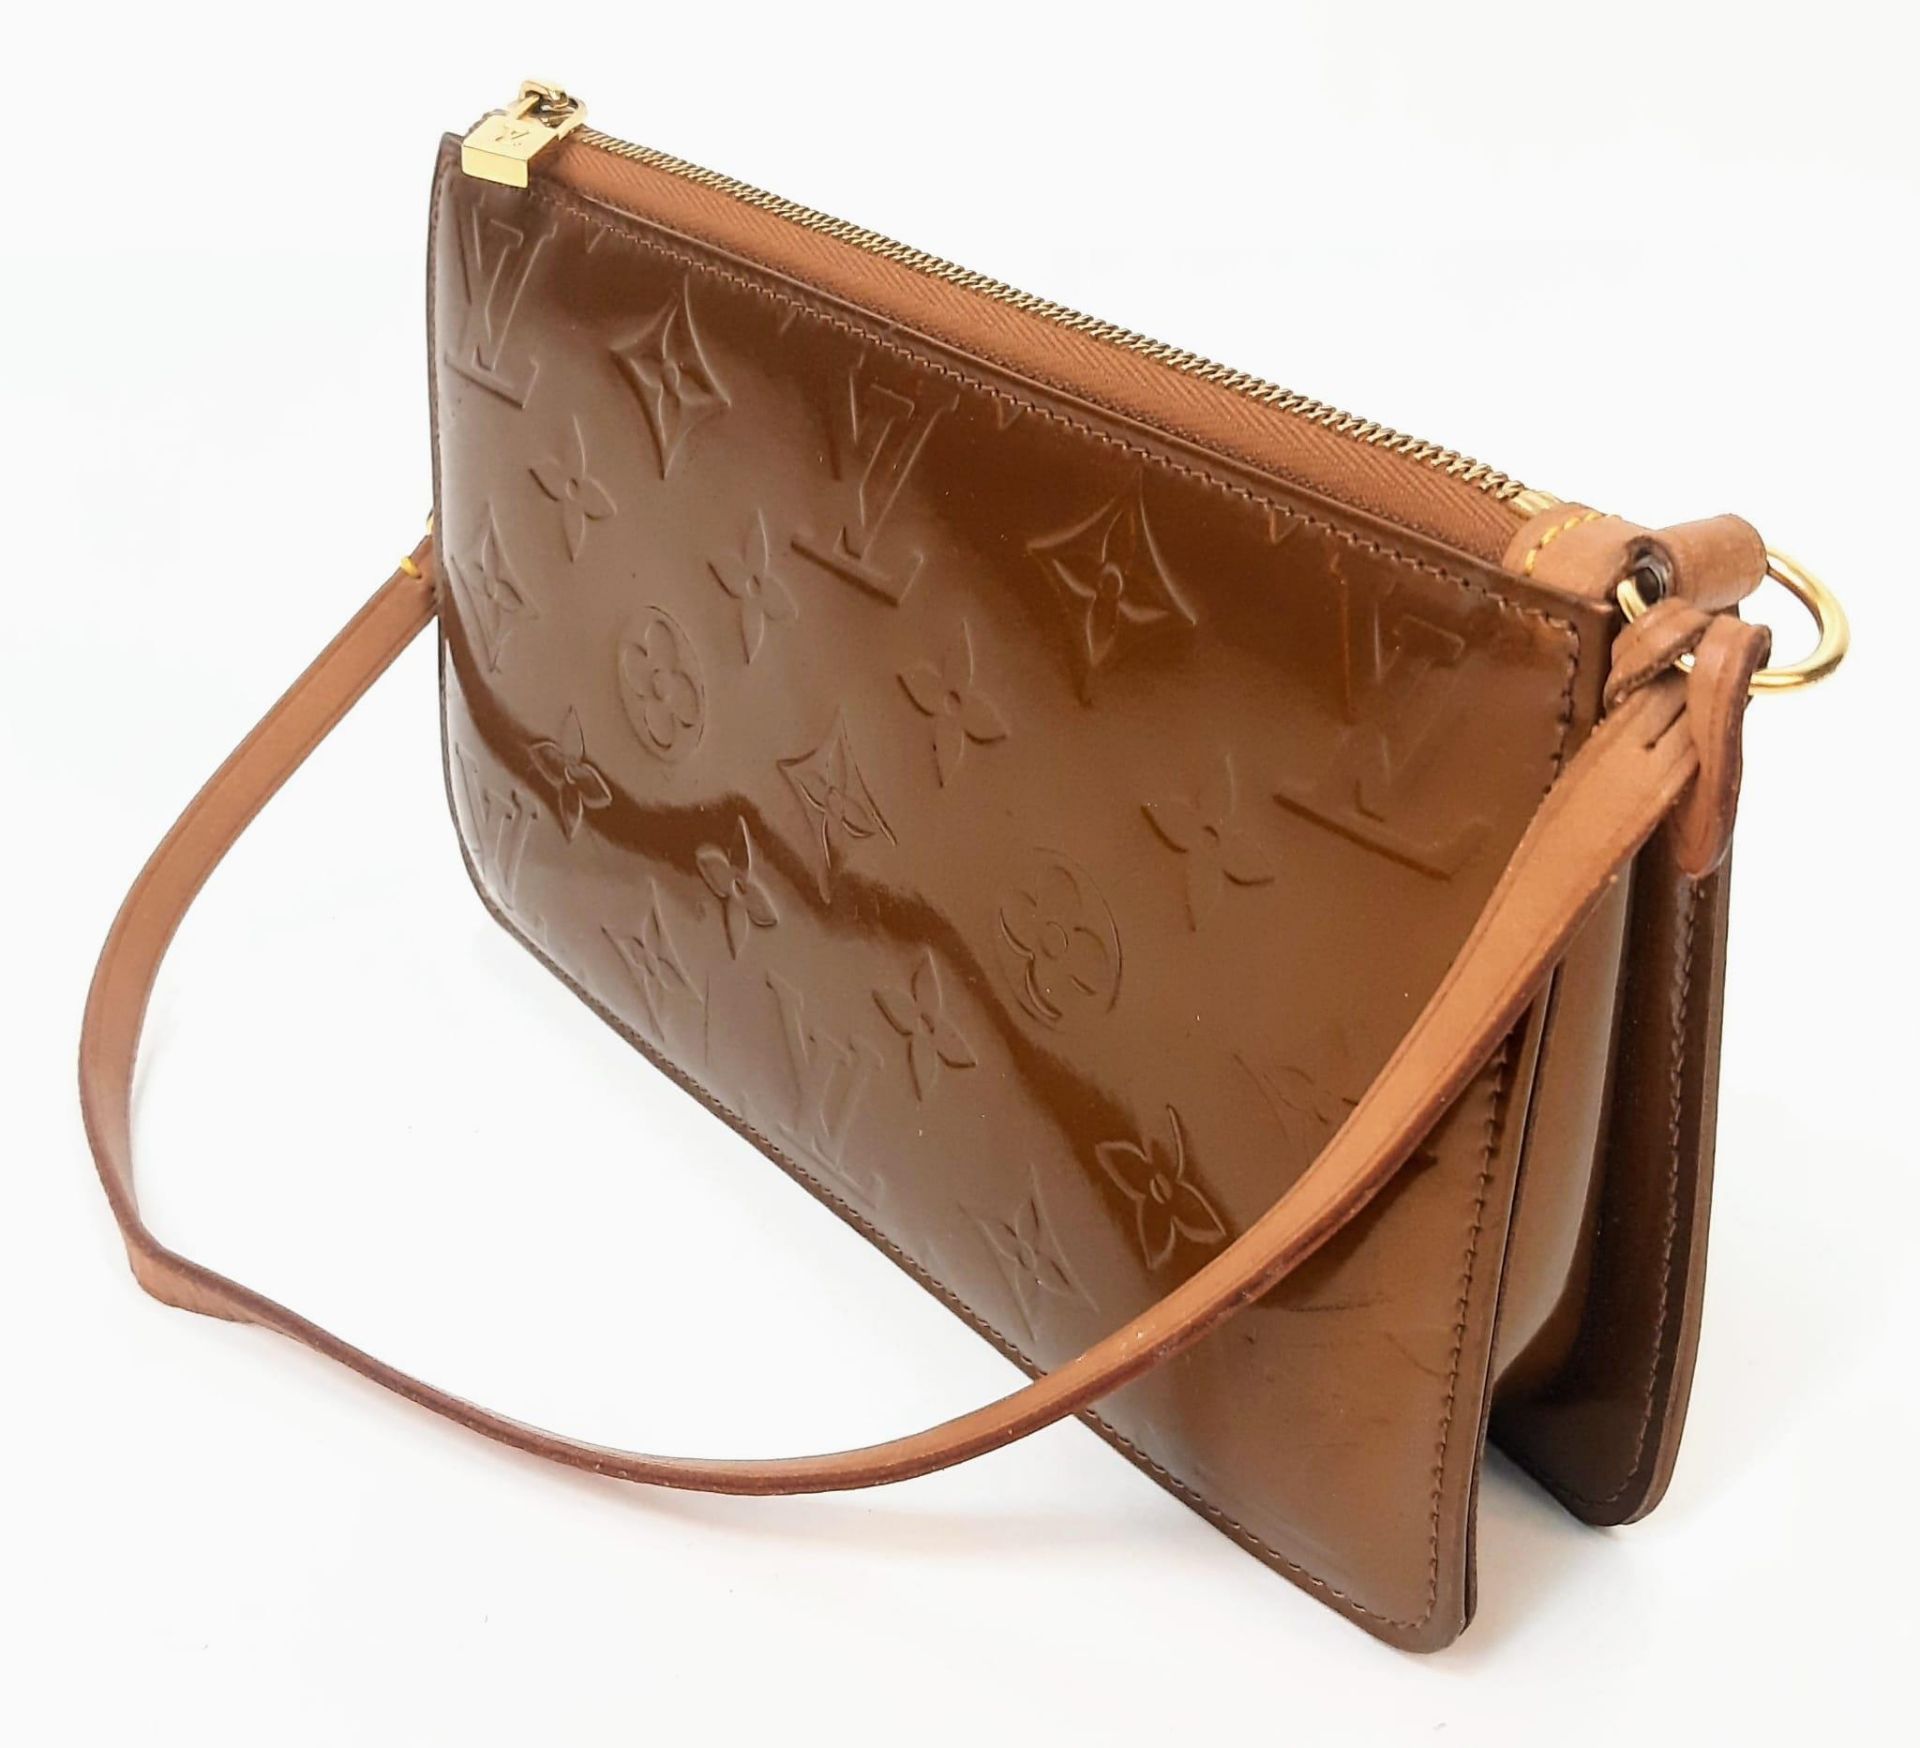 A Louis Vuitton Vernis Pochette Shoulder Bag in Copper, Emboss LV Detailing, Dark Tan Leather Strap. - Image 5 of 7